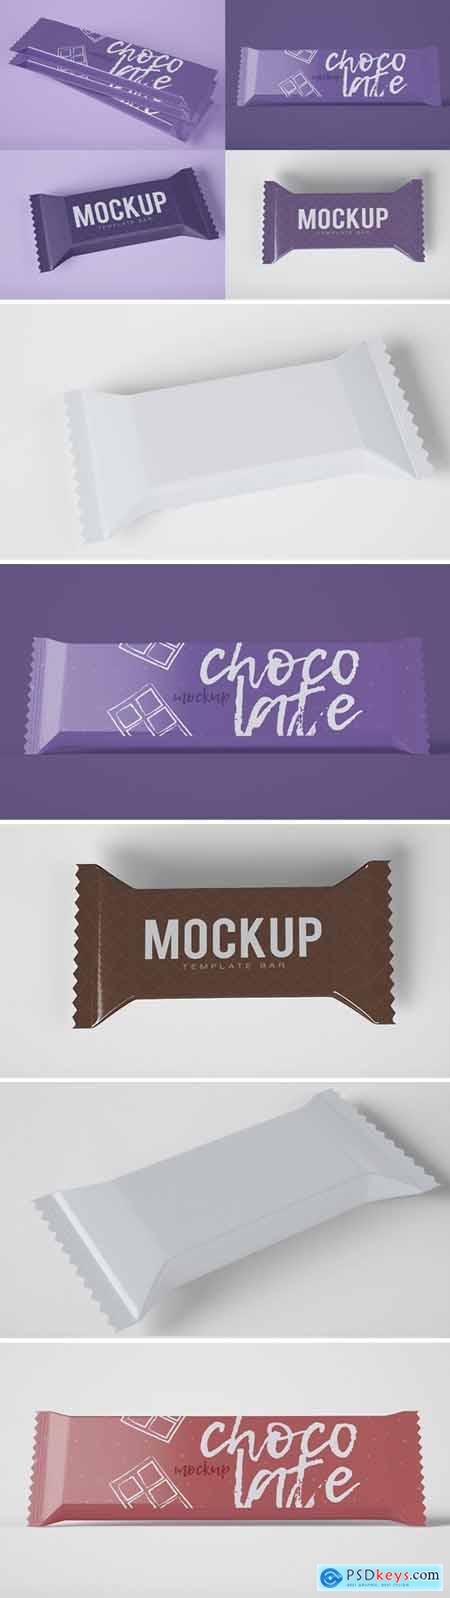 Download Chocolate Snack Bar Mockup Free Download Photoshop Vector Stock Image Via Torrent Zippyshare From Psdkeys Com